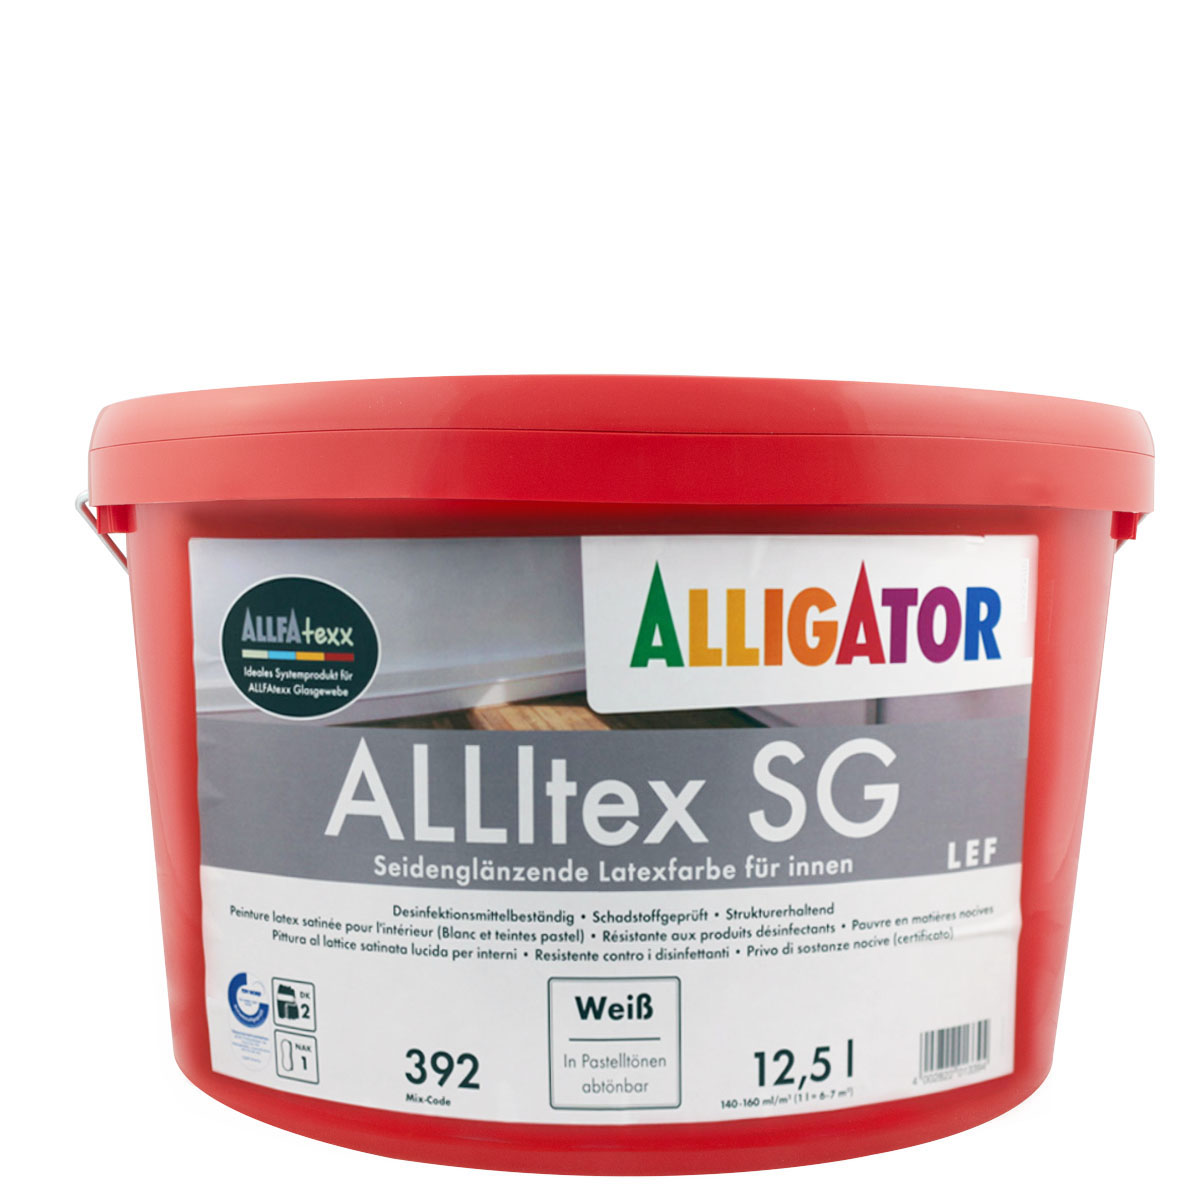 Alligator Allitex SG 12,5L weiss, Latexfarbe, Dispersonsfarbe, seidenglänzend